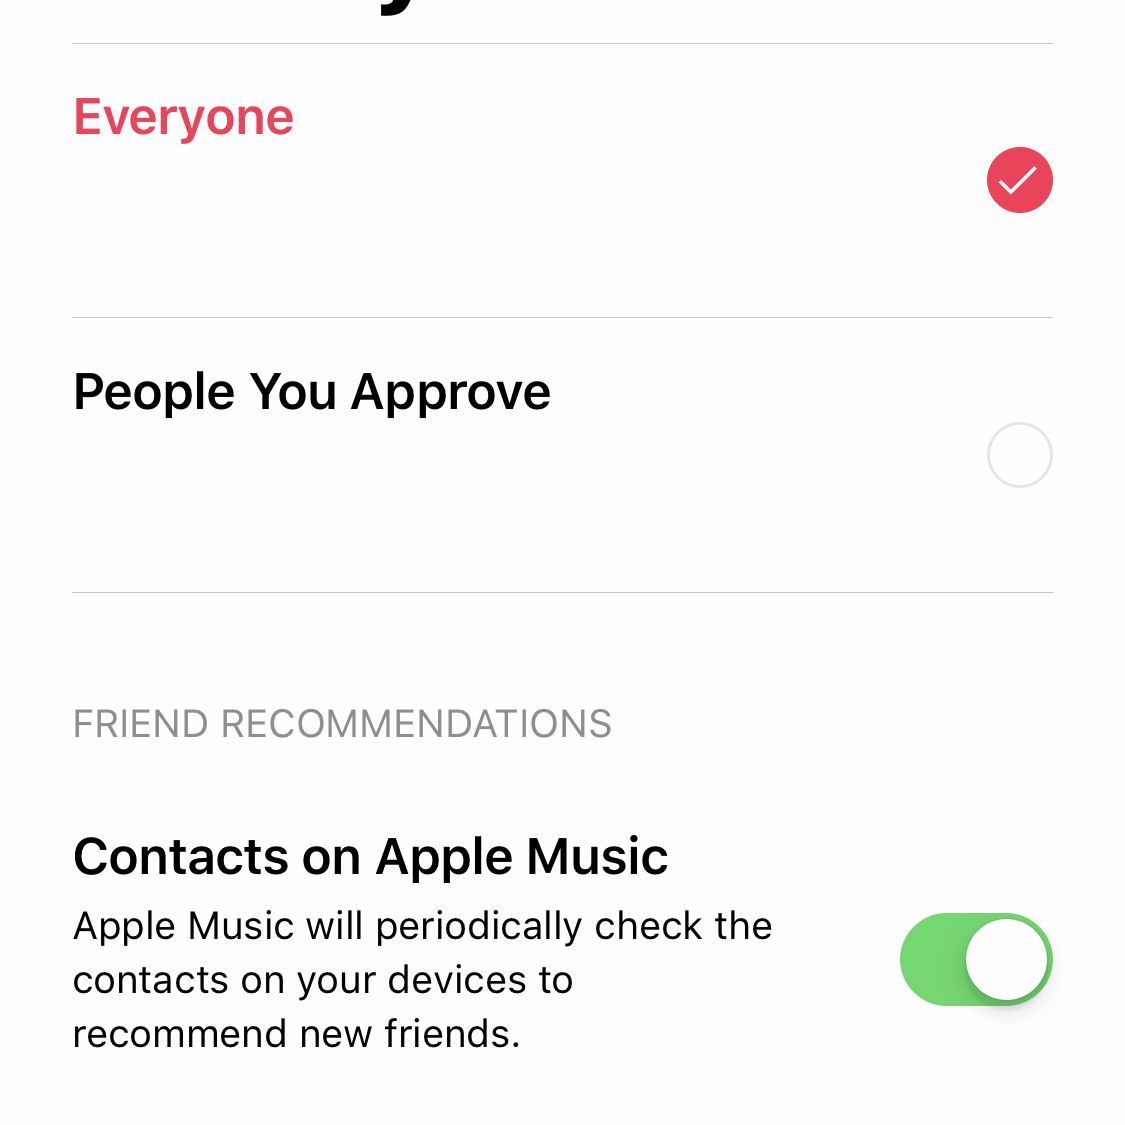 Снимок экрана параметров общего профиля в Apple Music на iPhone